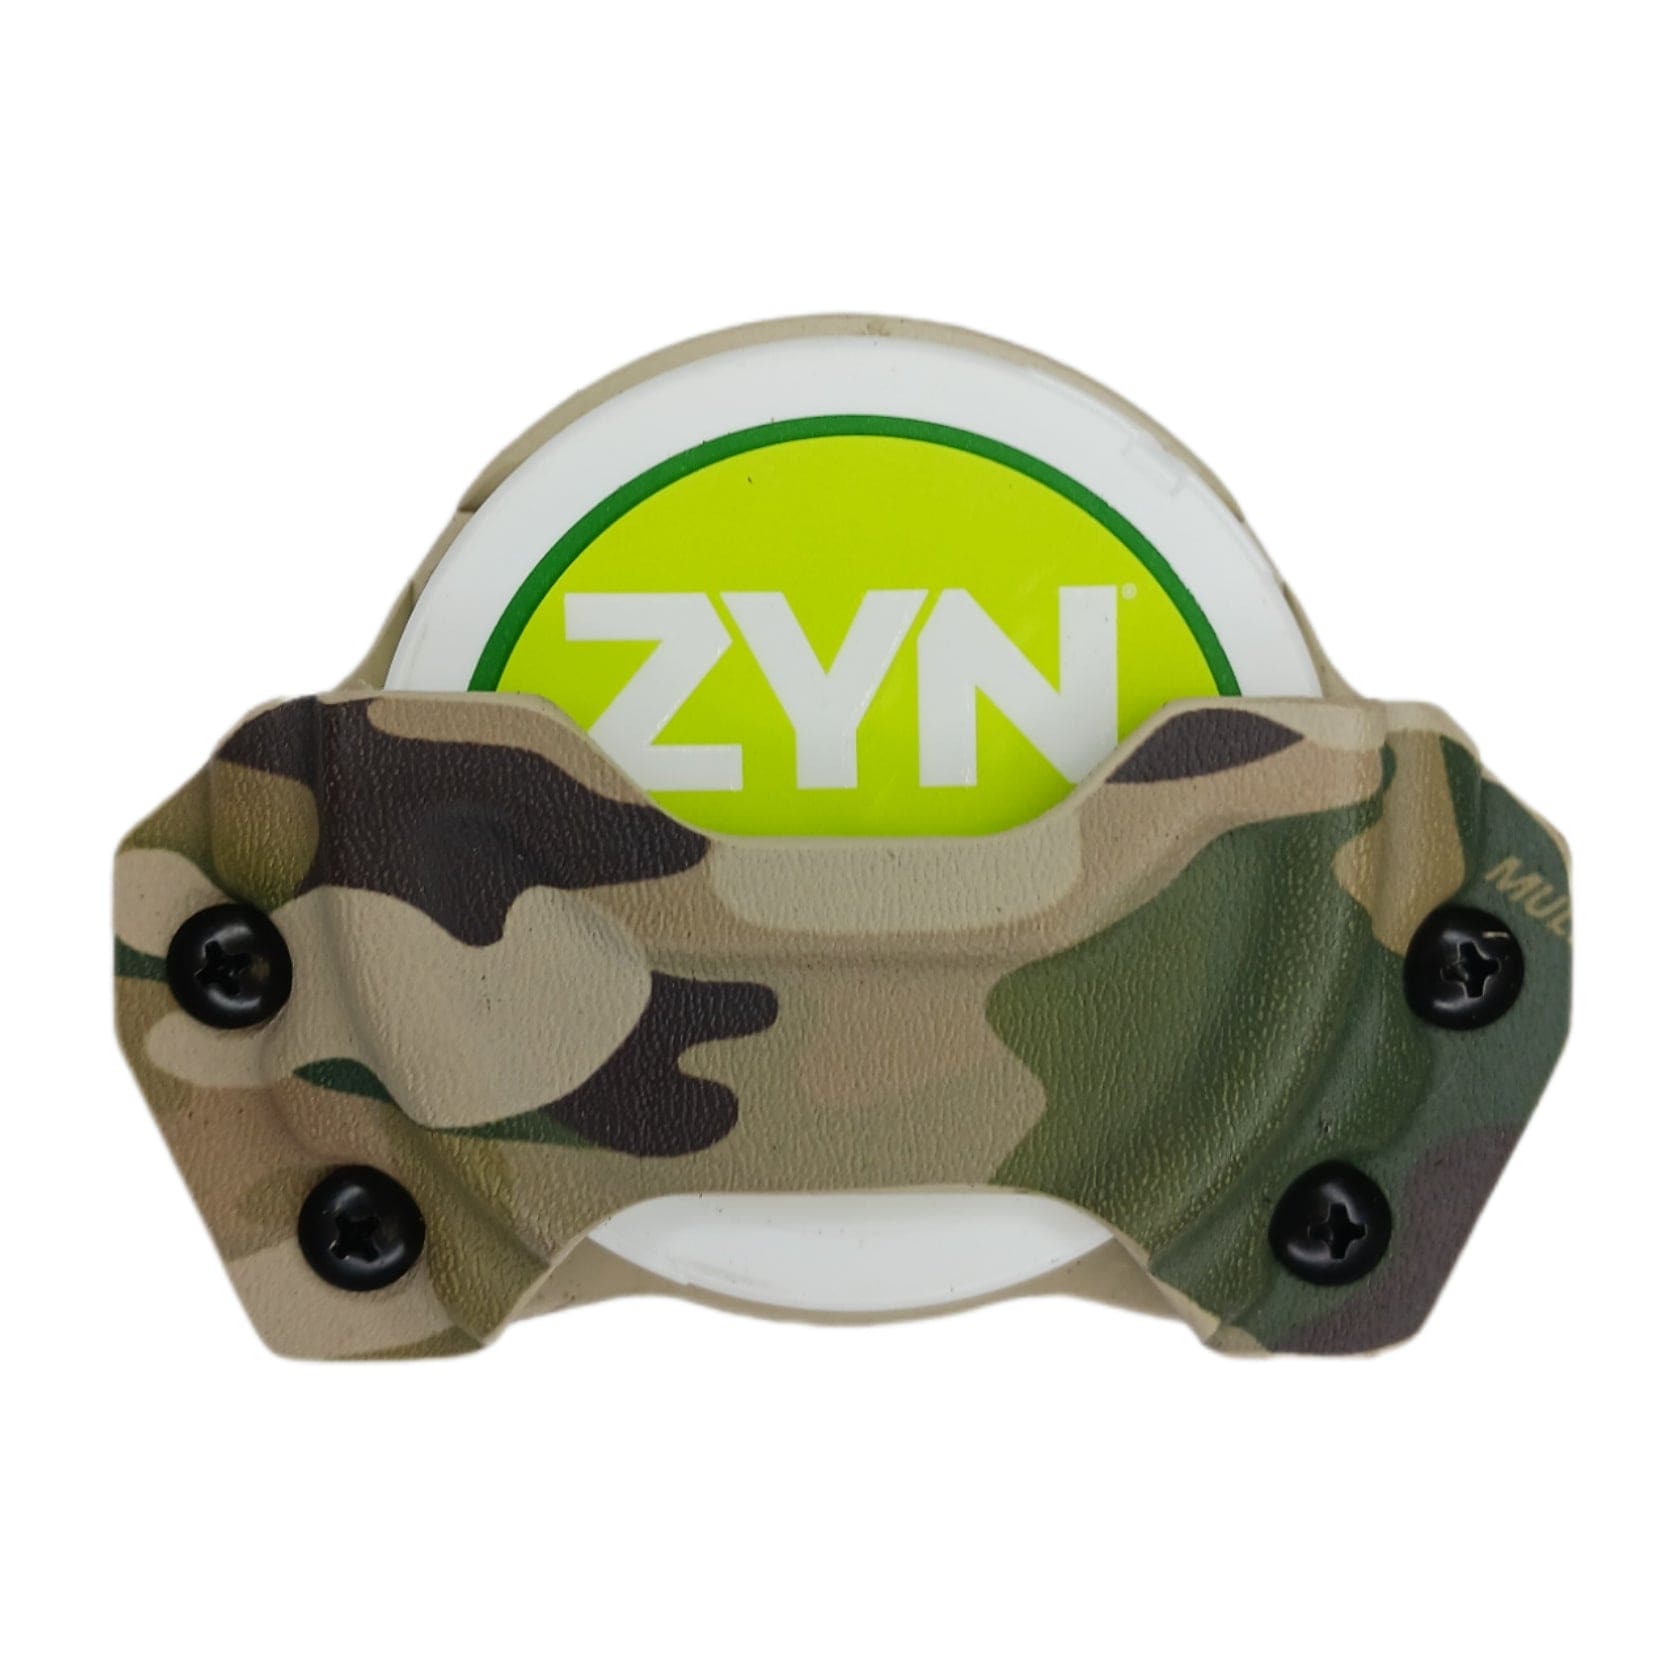 Desktop Zyn Holder / Zyn Caddy Holds 2 Cans 